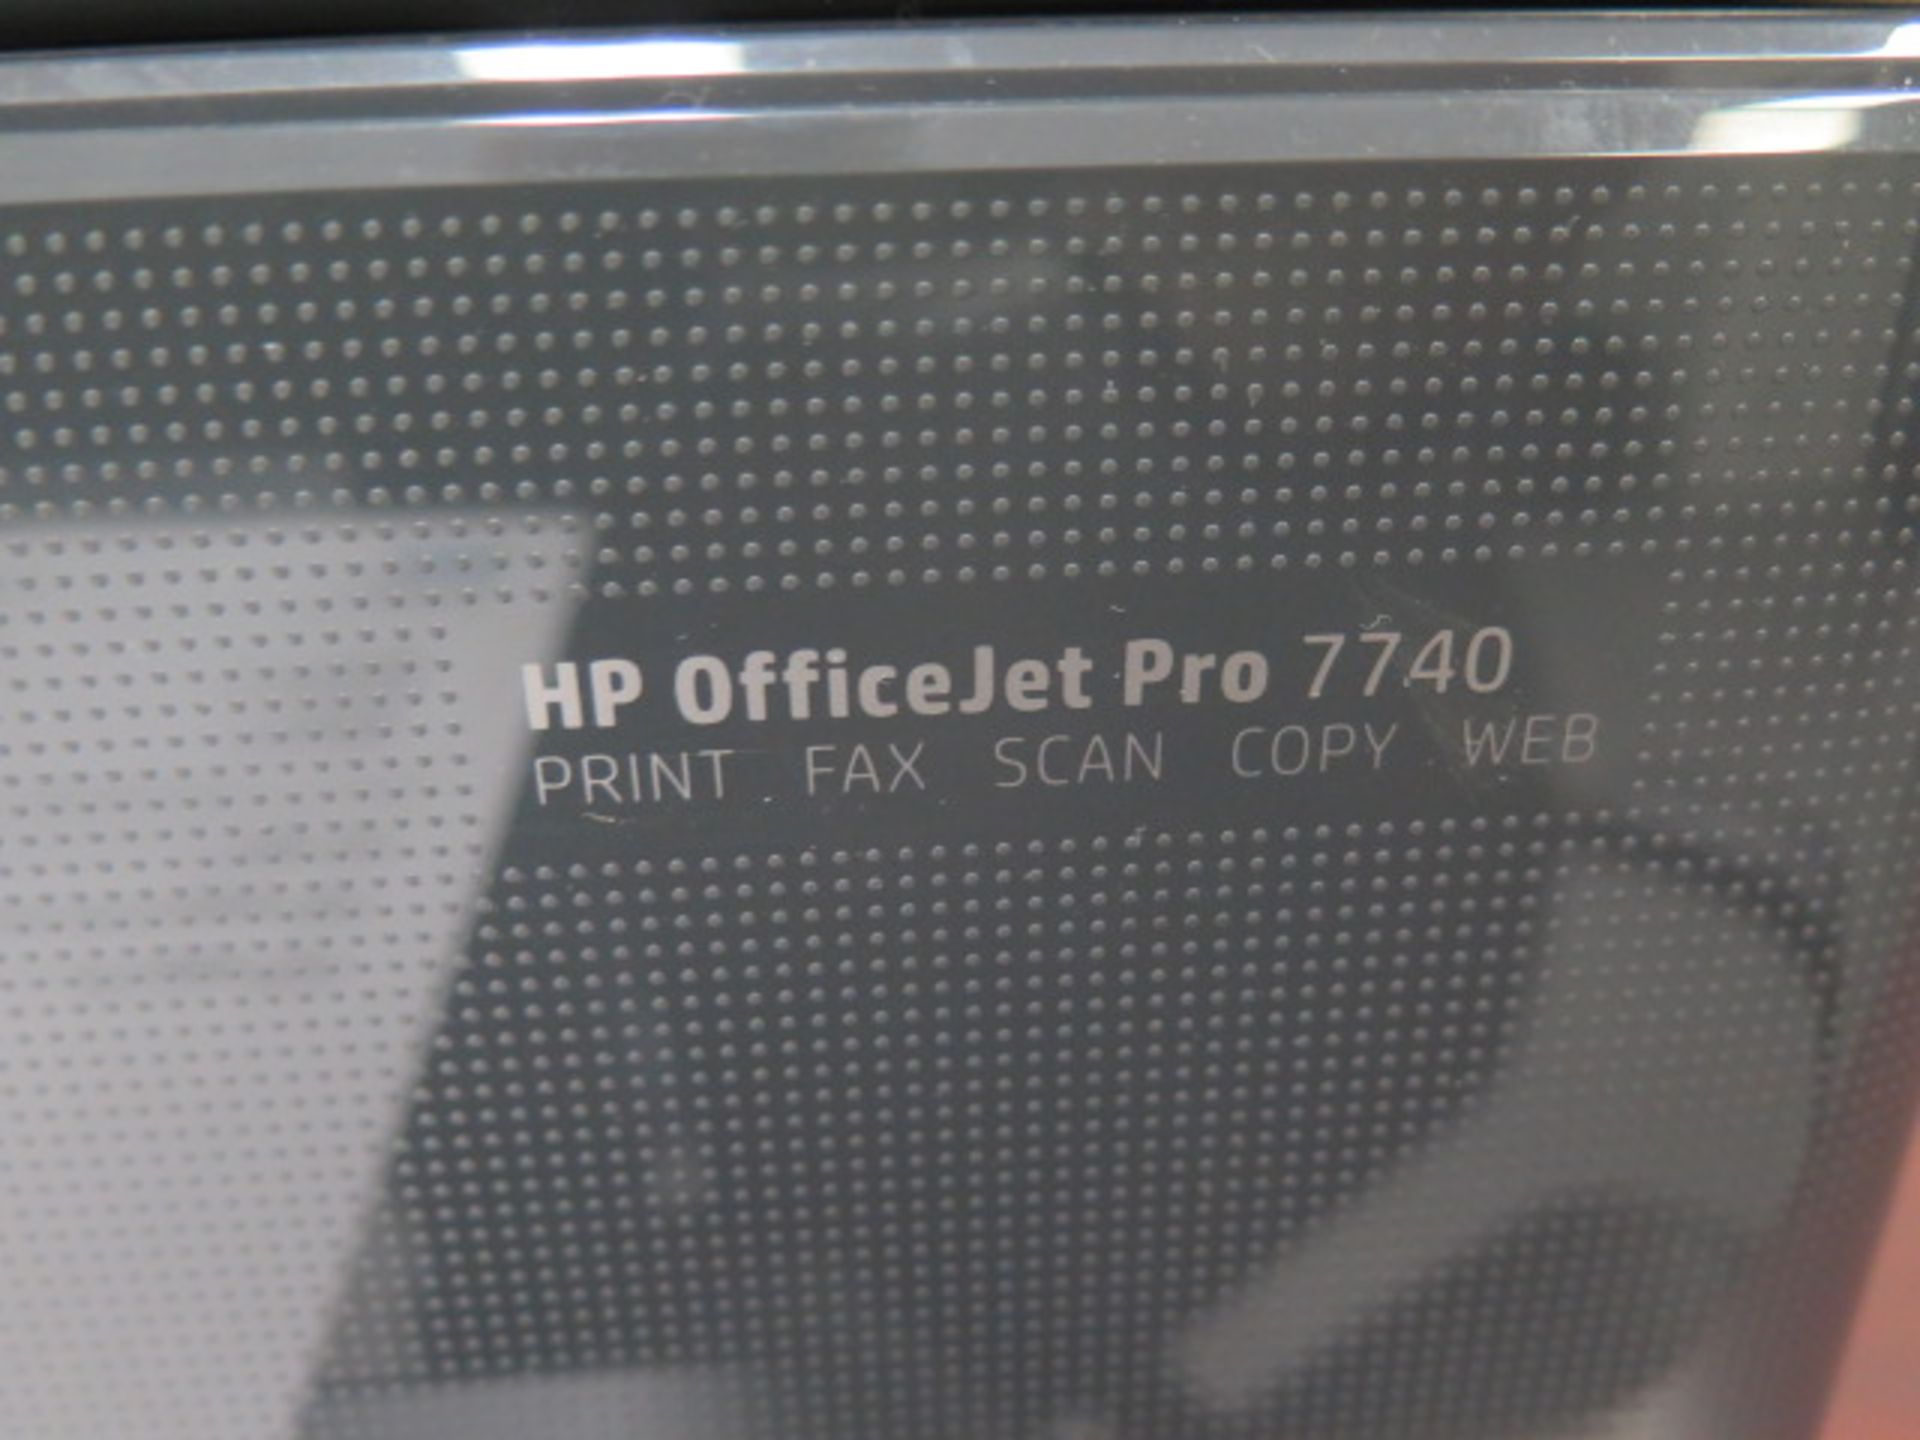 HP OfficeJet Pro 7740 Copy Machine (SOLD AS-IS - NO WARRANTY) - Image 5 of 7